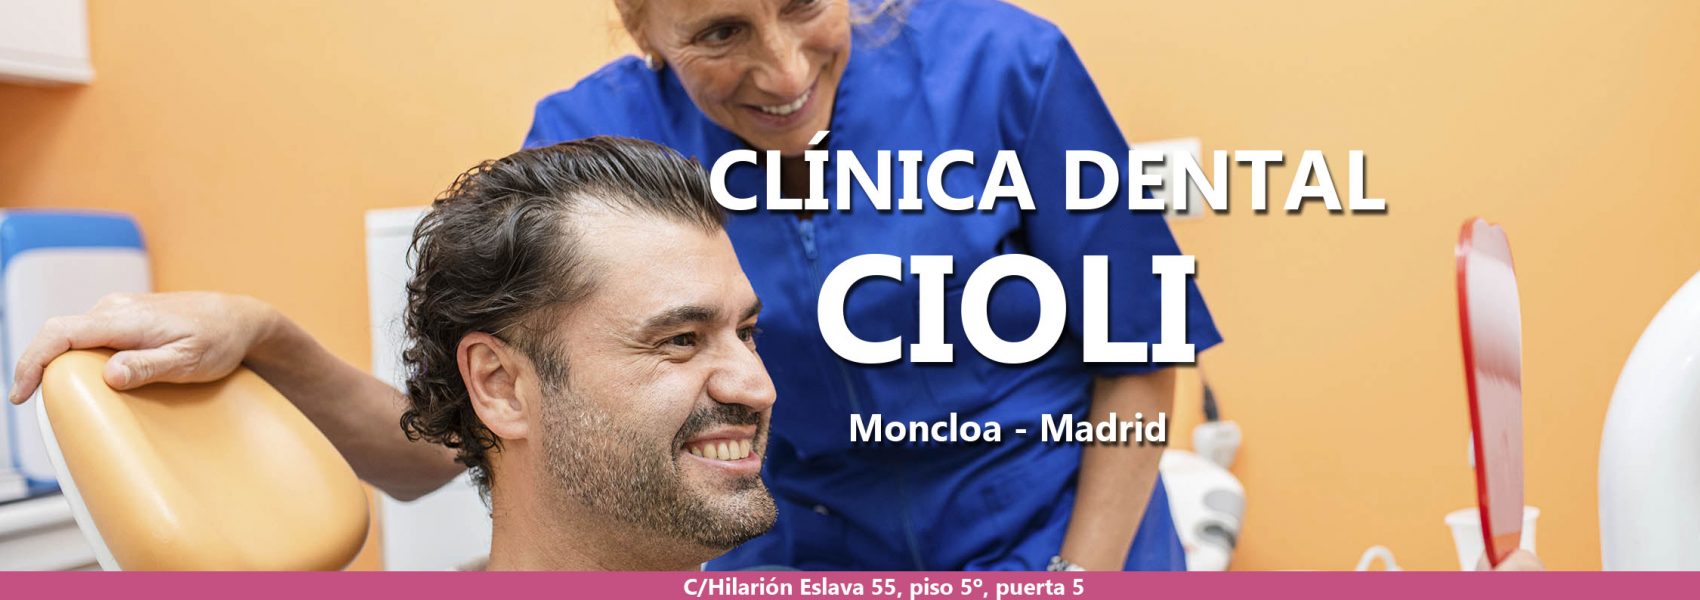 Clínica dental Madrid Centro